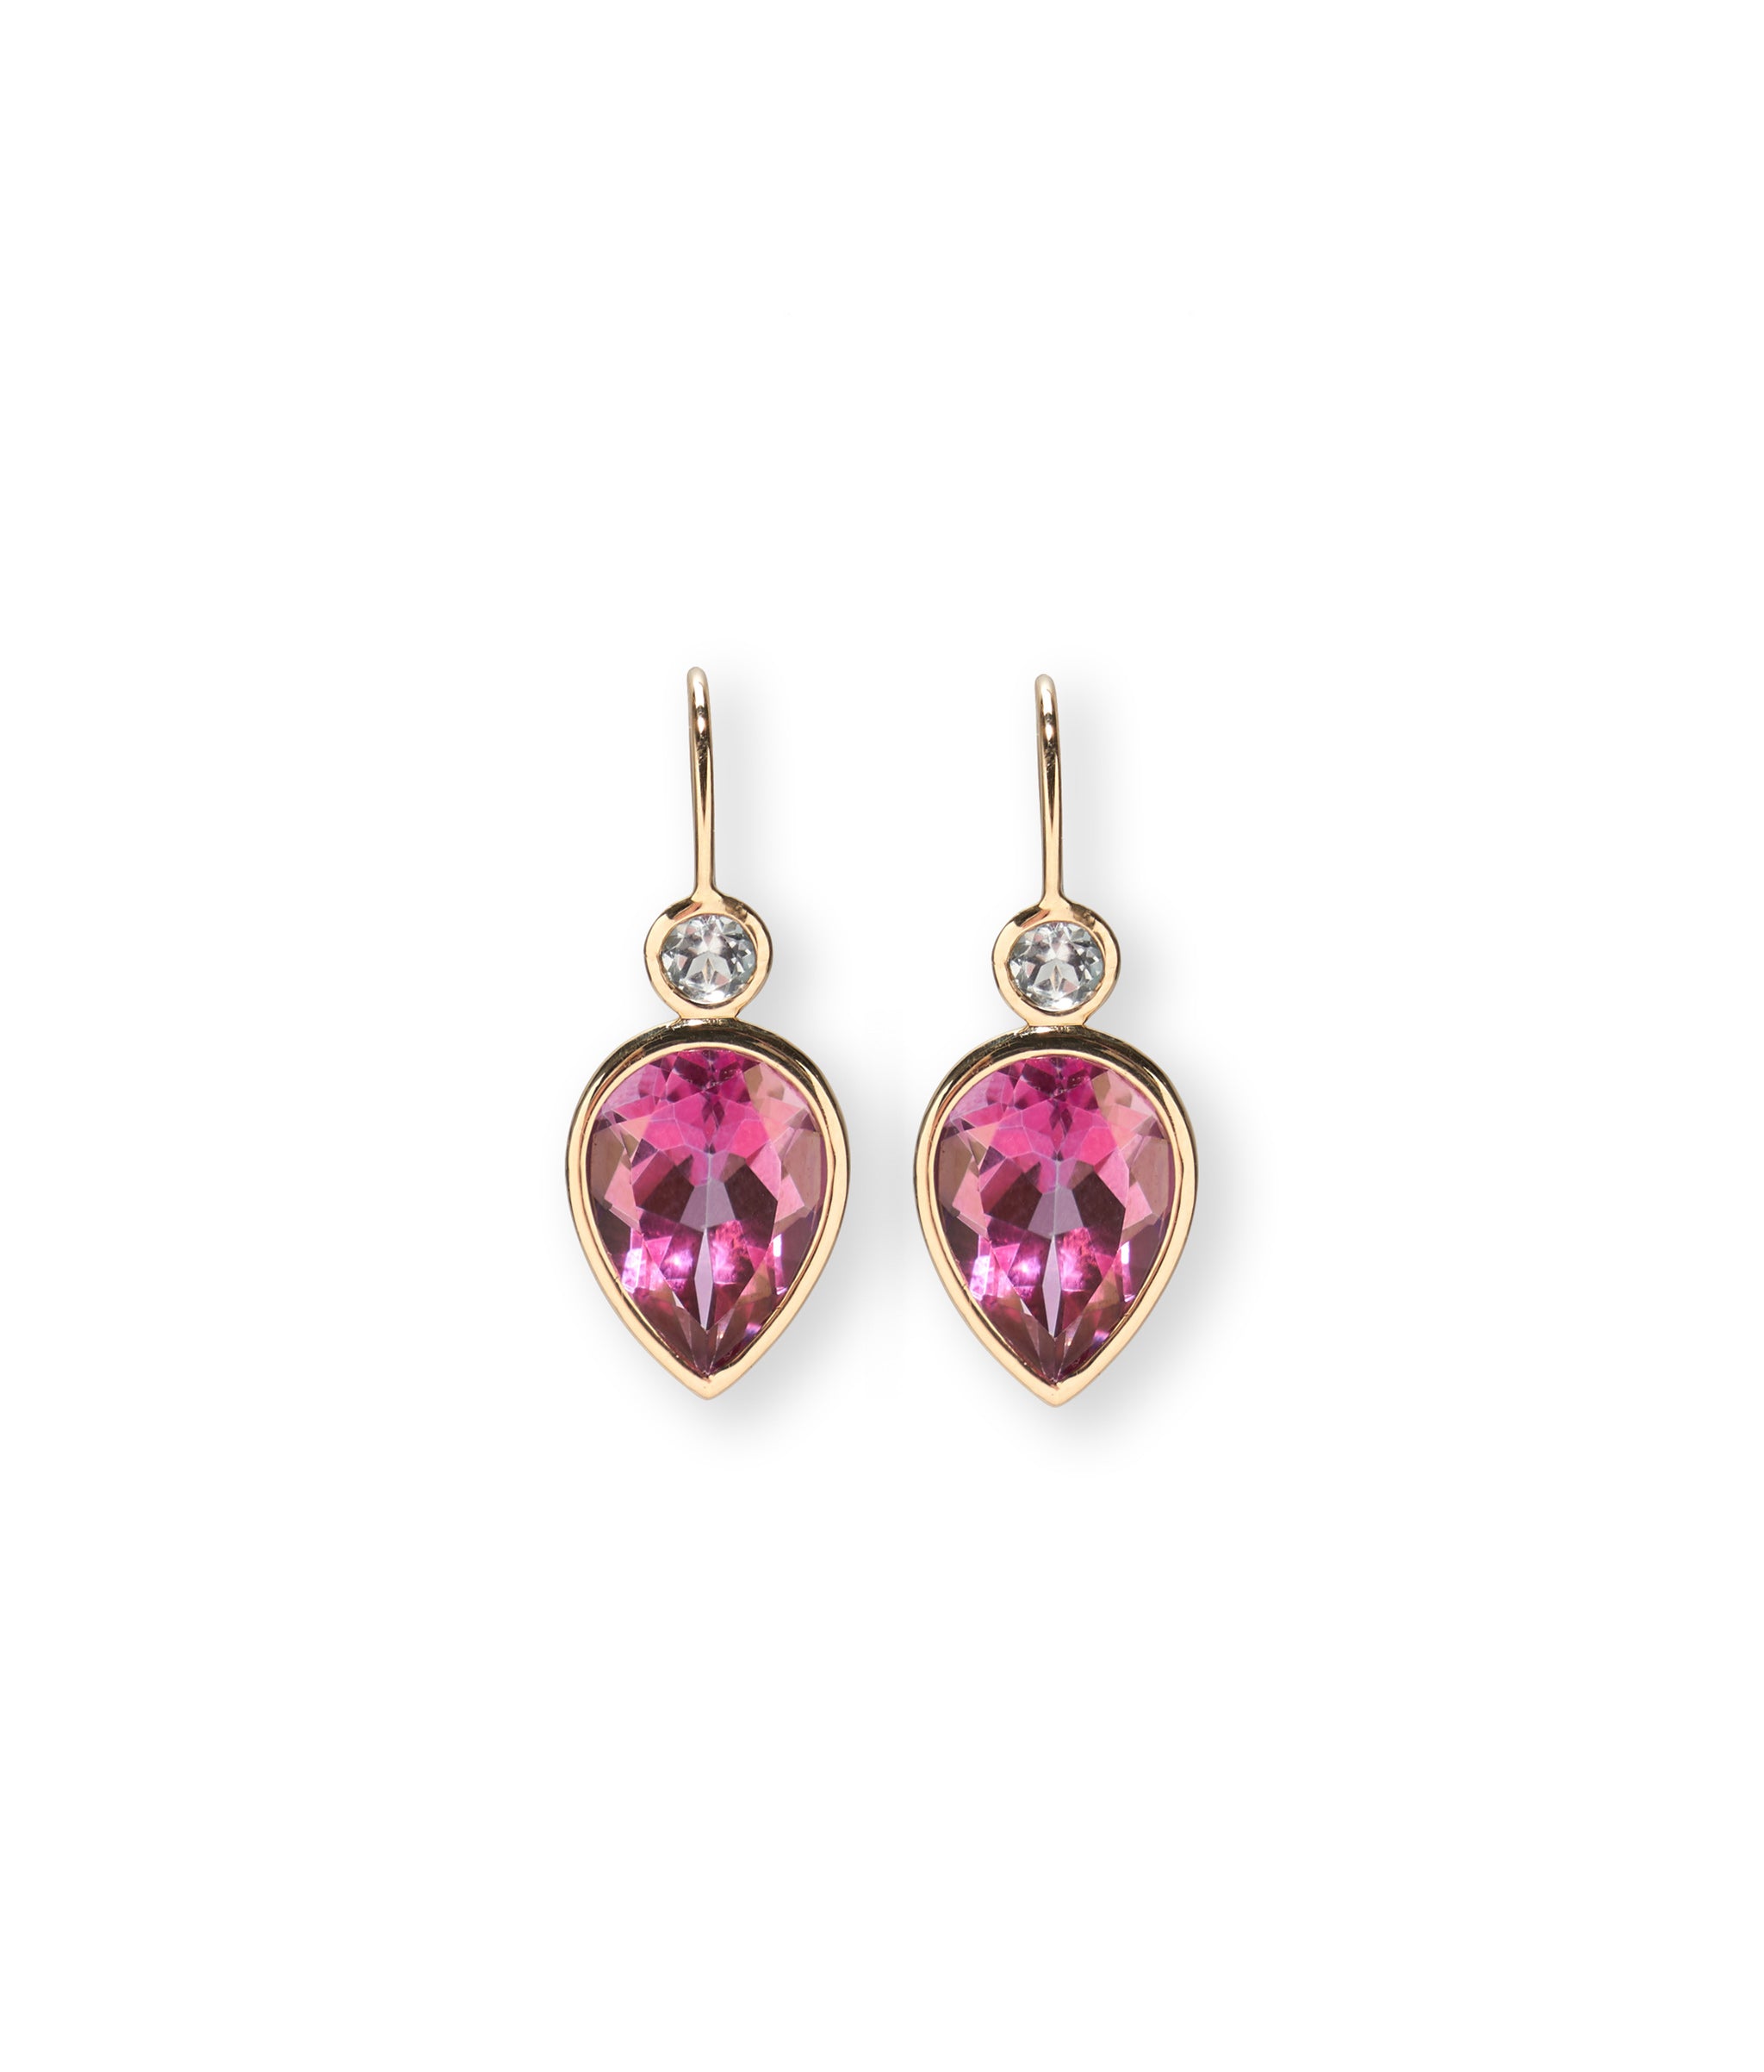 Hera Earrings in Pink Topaz. Sky blue topaz faceted, pear-shaped pink topaz stones, enrobed in 14k gold bezels.